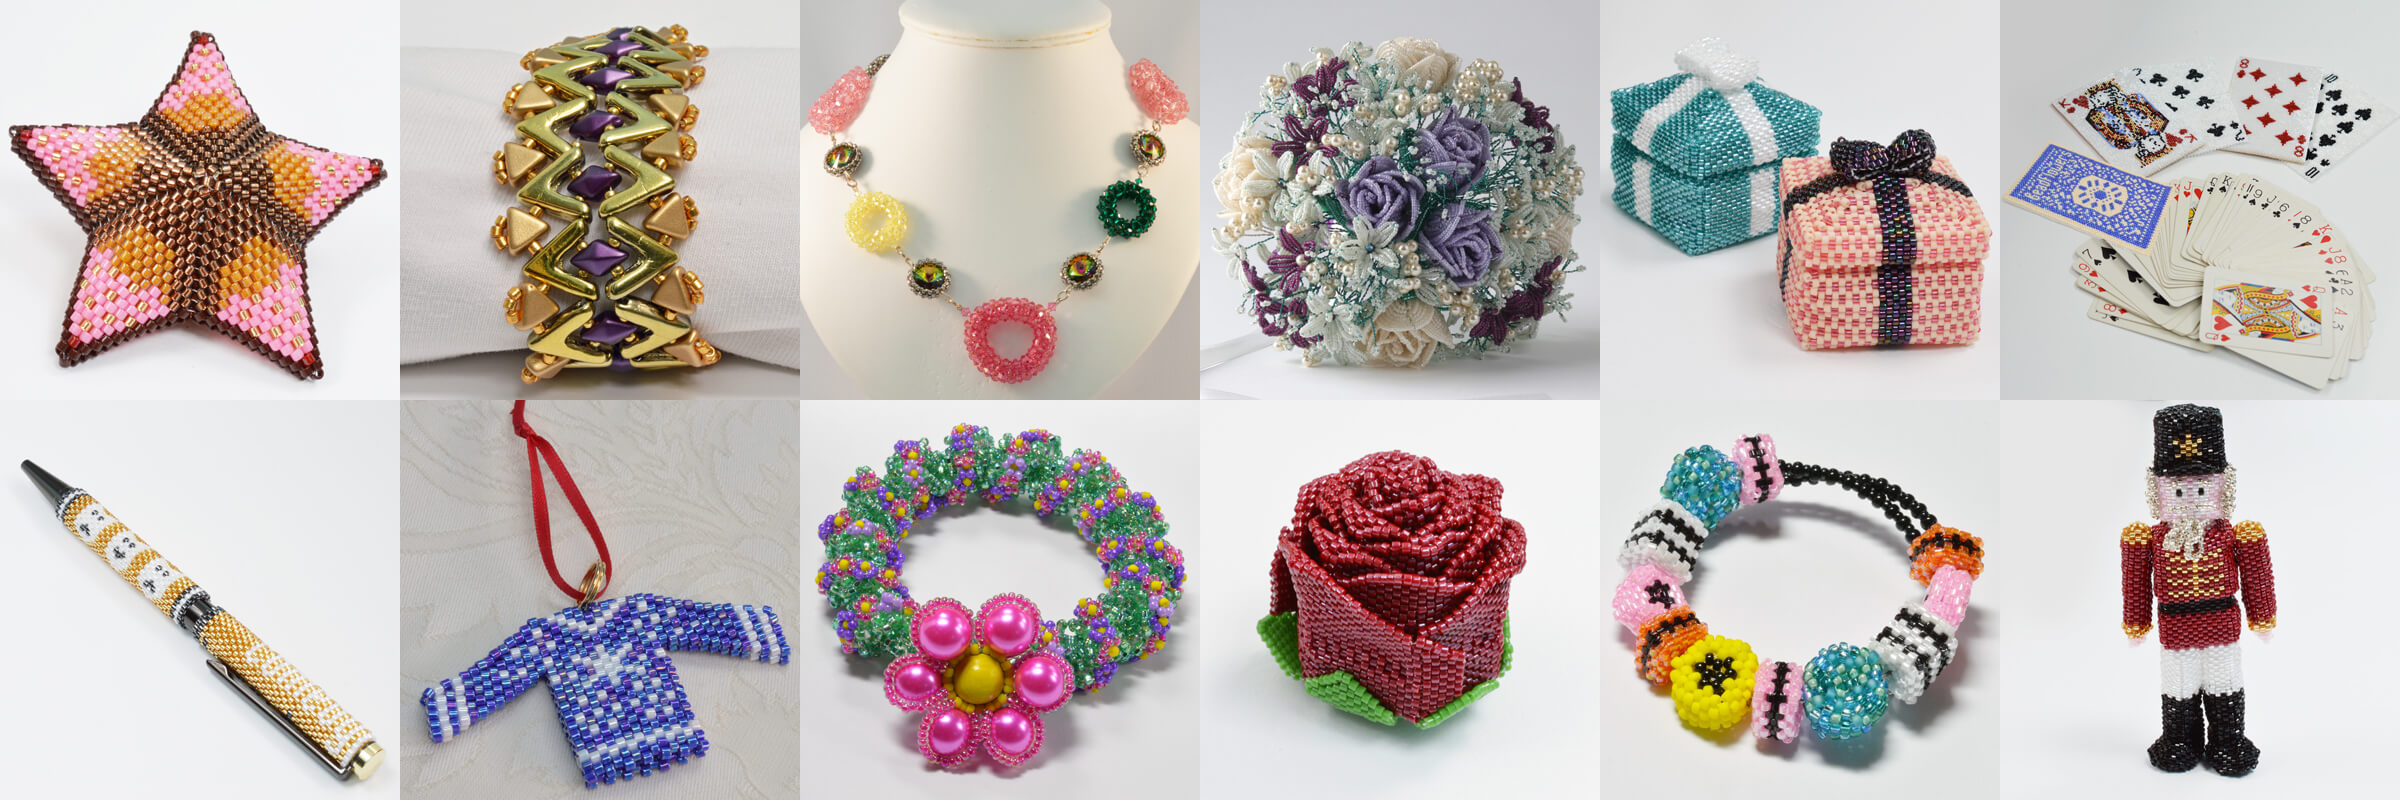 File:Handmade bead and wire flowers.jpg - Wikipedia